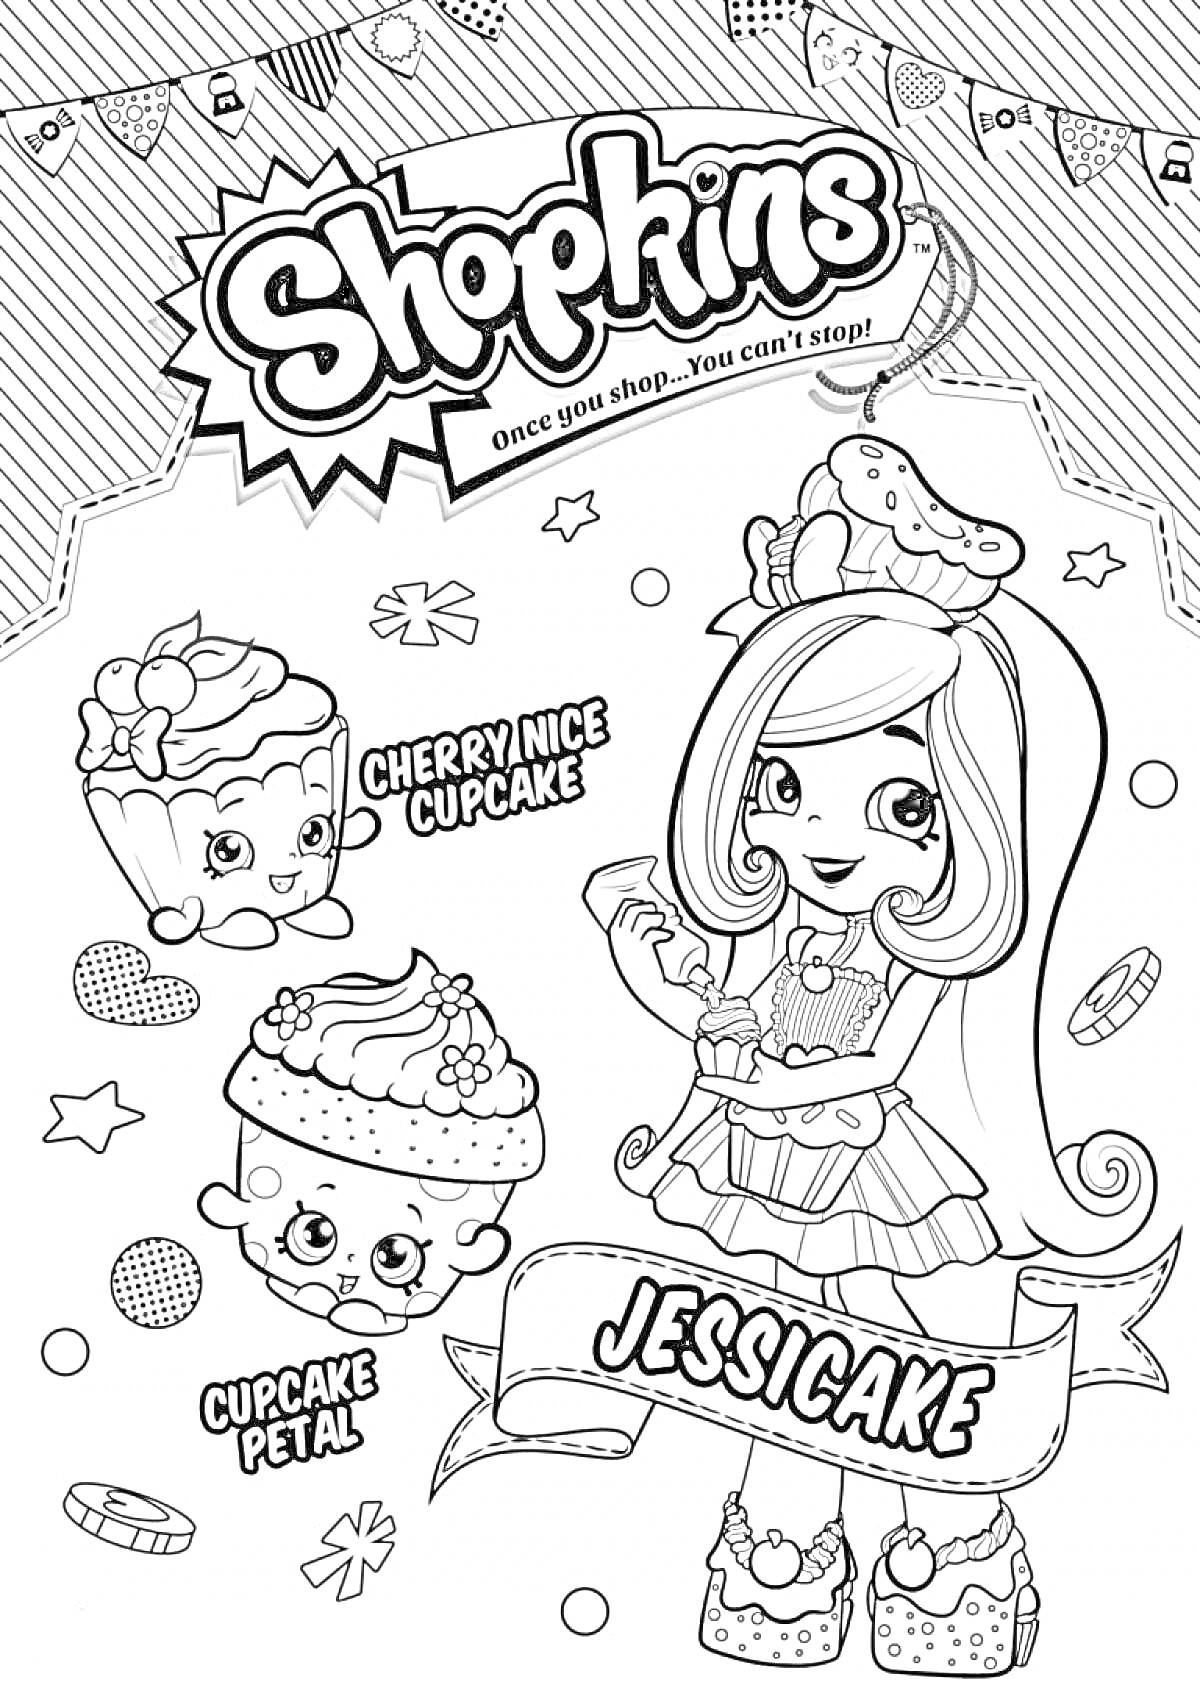 Раскраска Shopkins с персонажами Jessicake, Cherry Nice Cupcake и Cupcake Petal